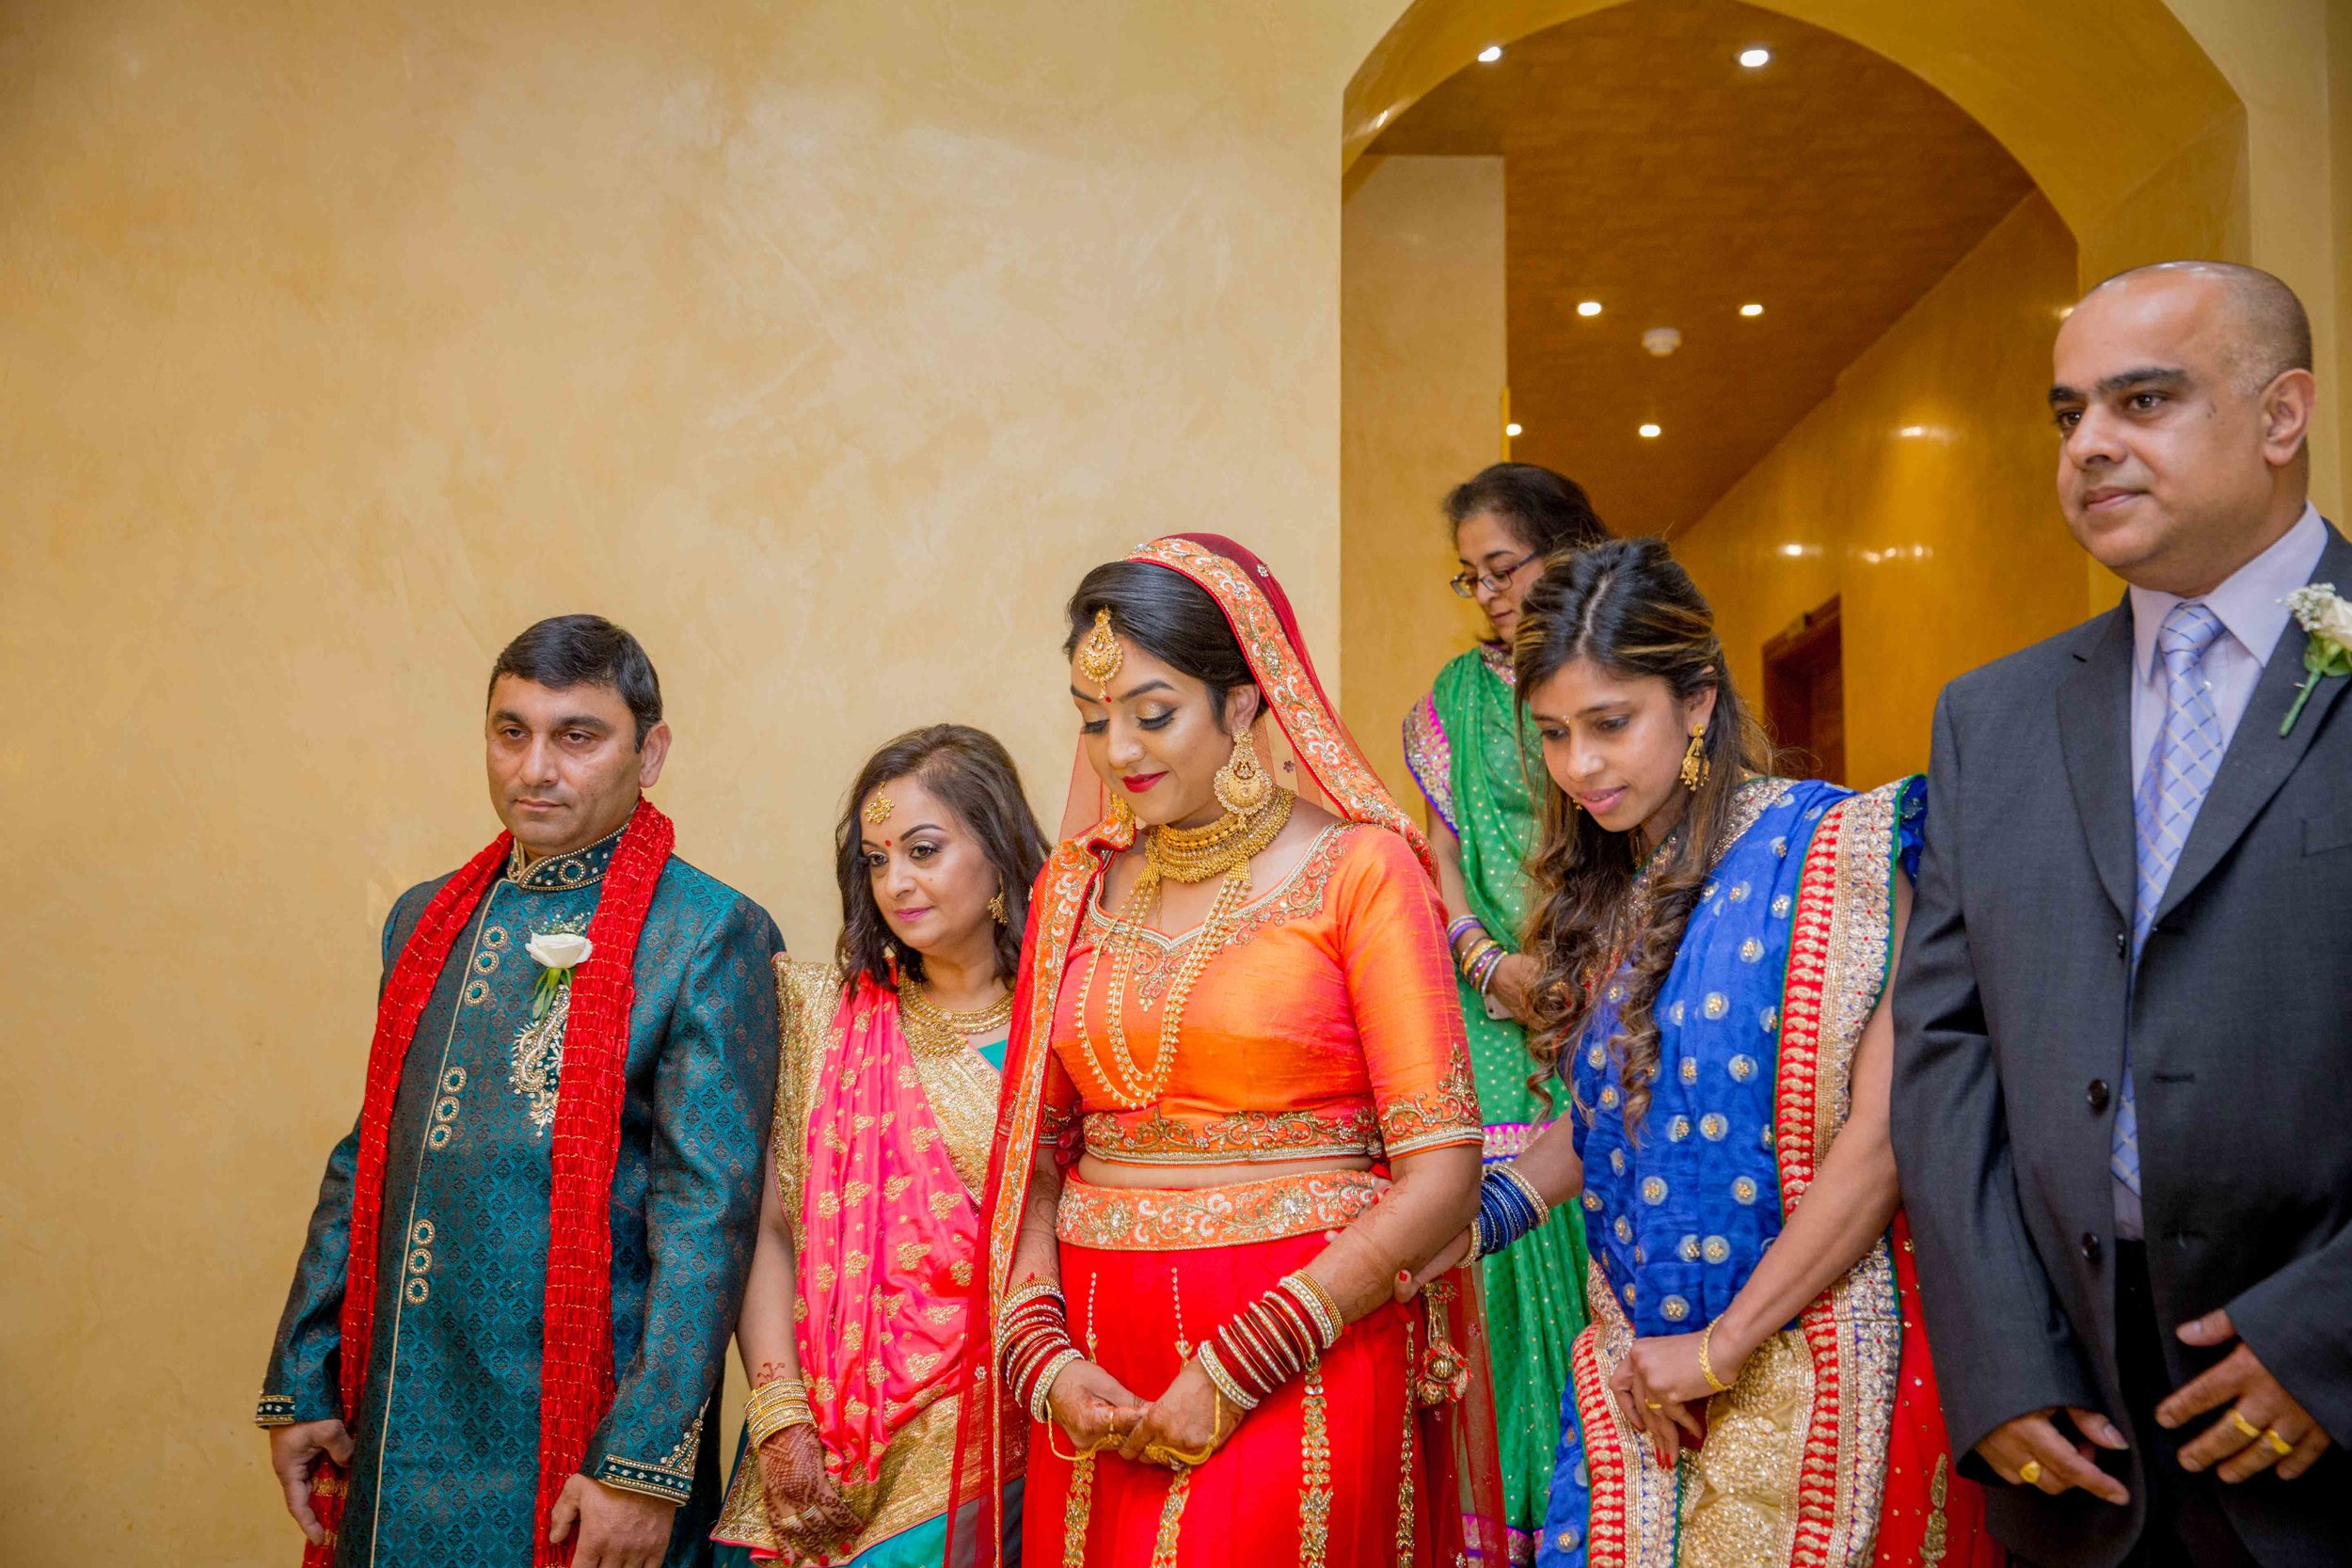 premier-banquetting-london-Hindu-asian-wedding-photographer-natalia-smith-photography-16.jpg